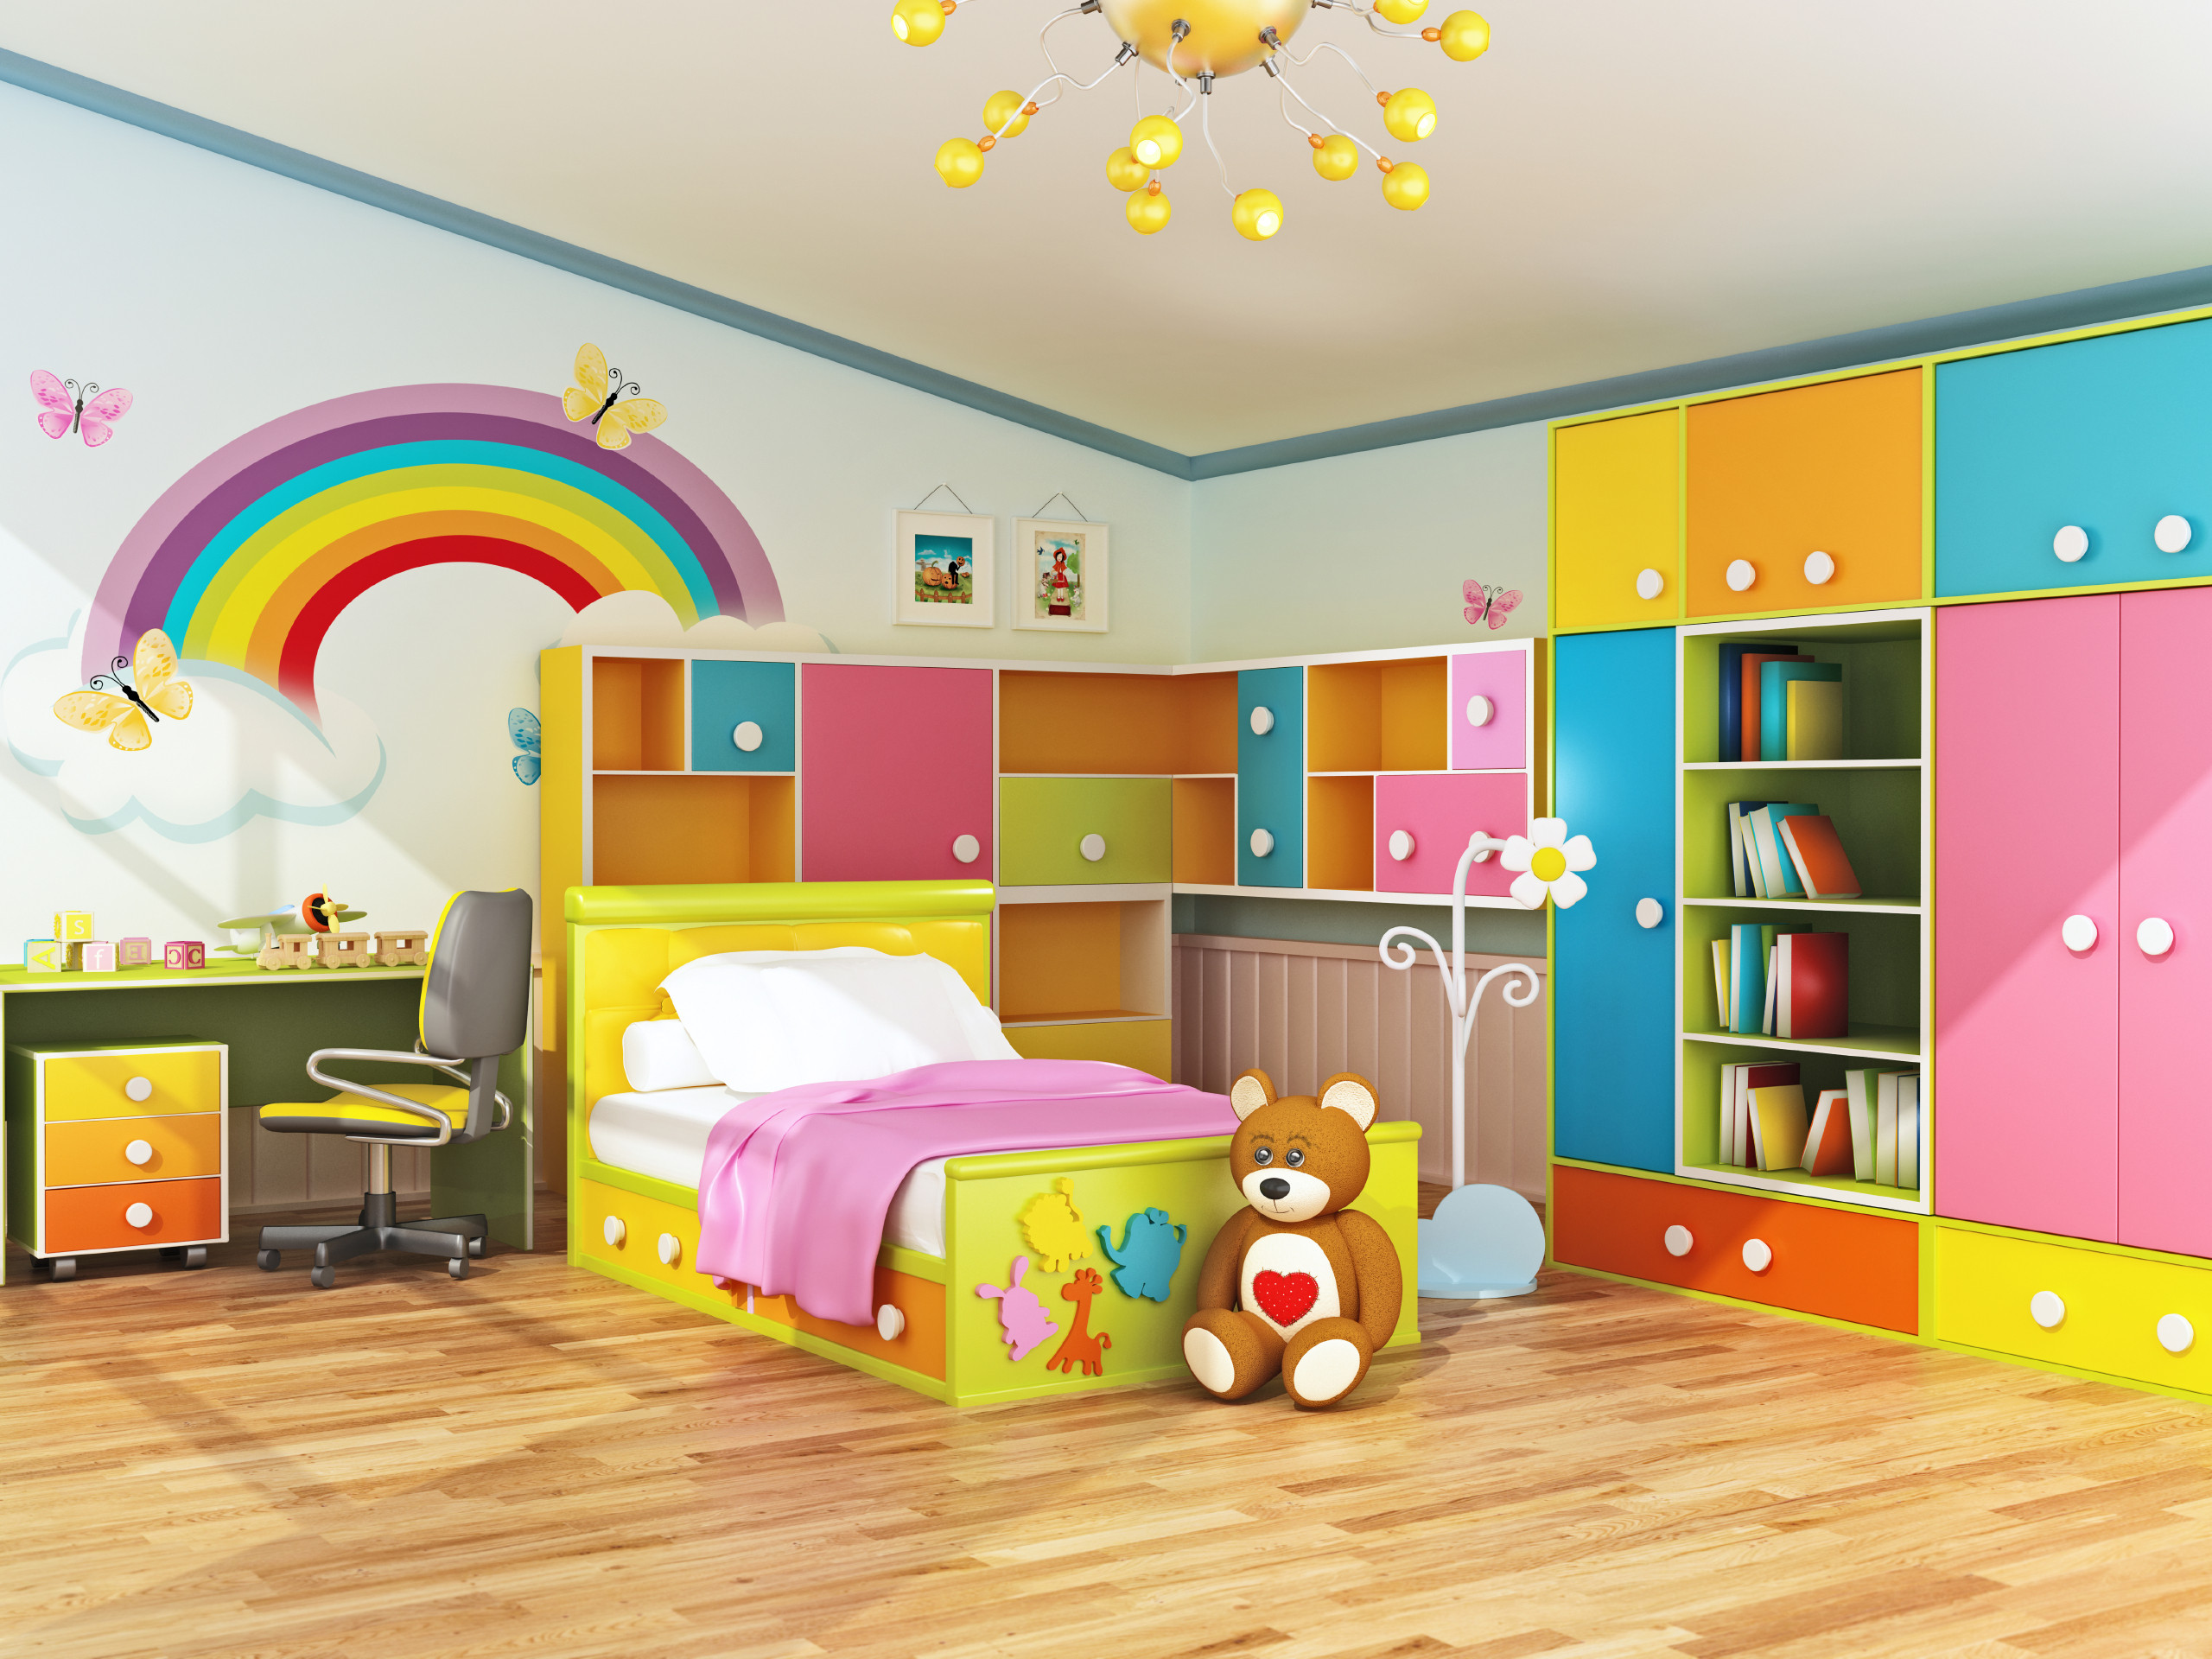 Ideas For Kids Bedroom
 Plan Ahead When Decorating Kids Bedrooms